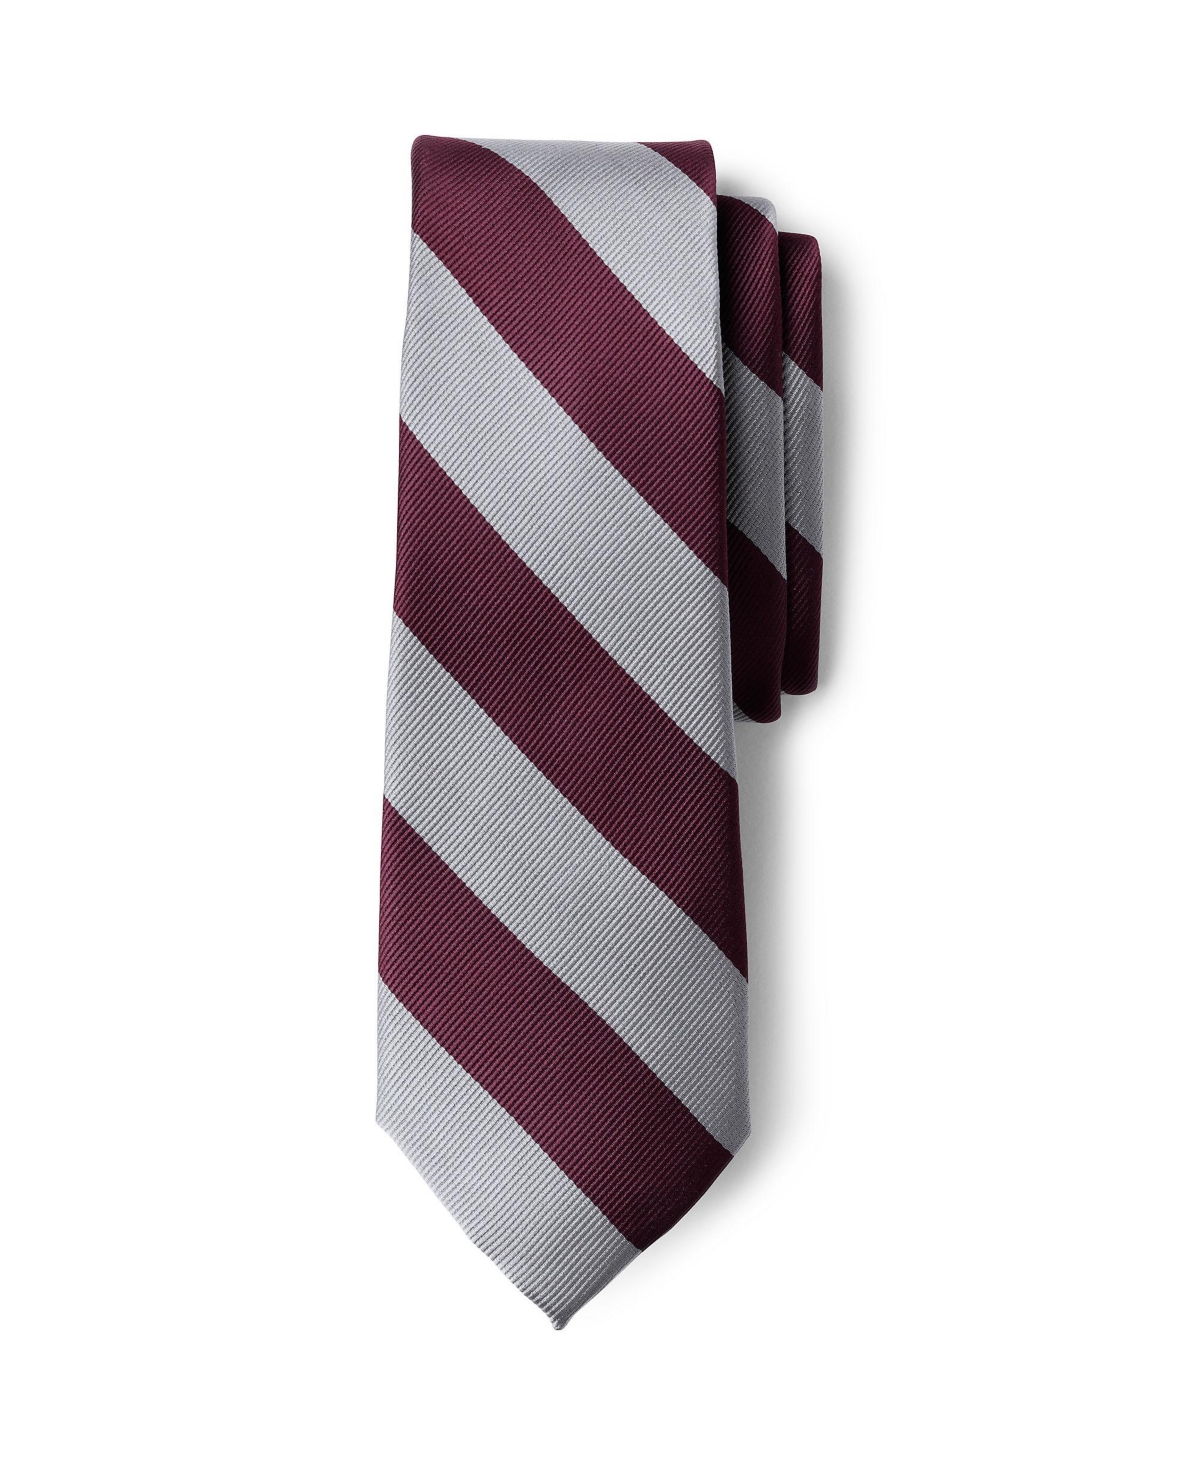 Men's School Uniform Stripe To Be Tied Tie - Burgundy/feather gray stripe